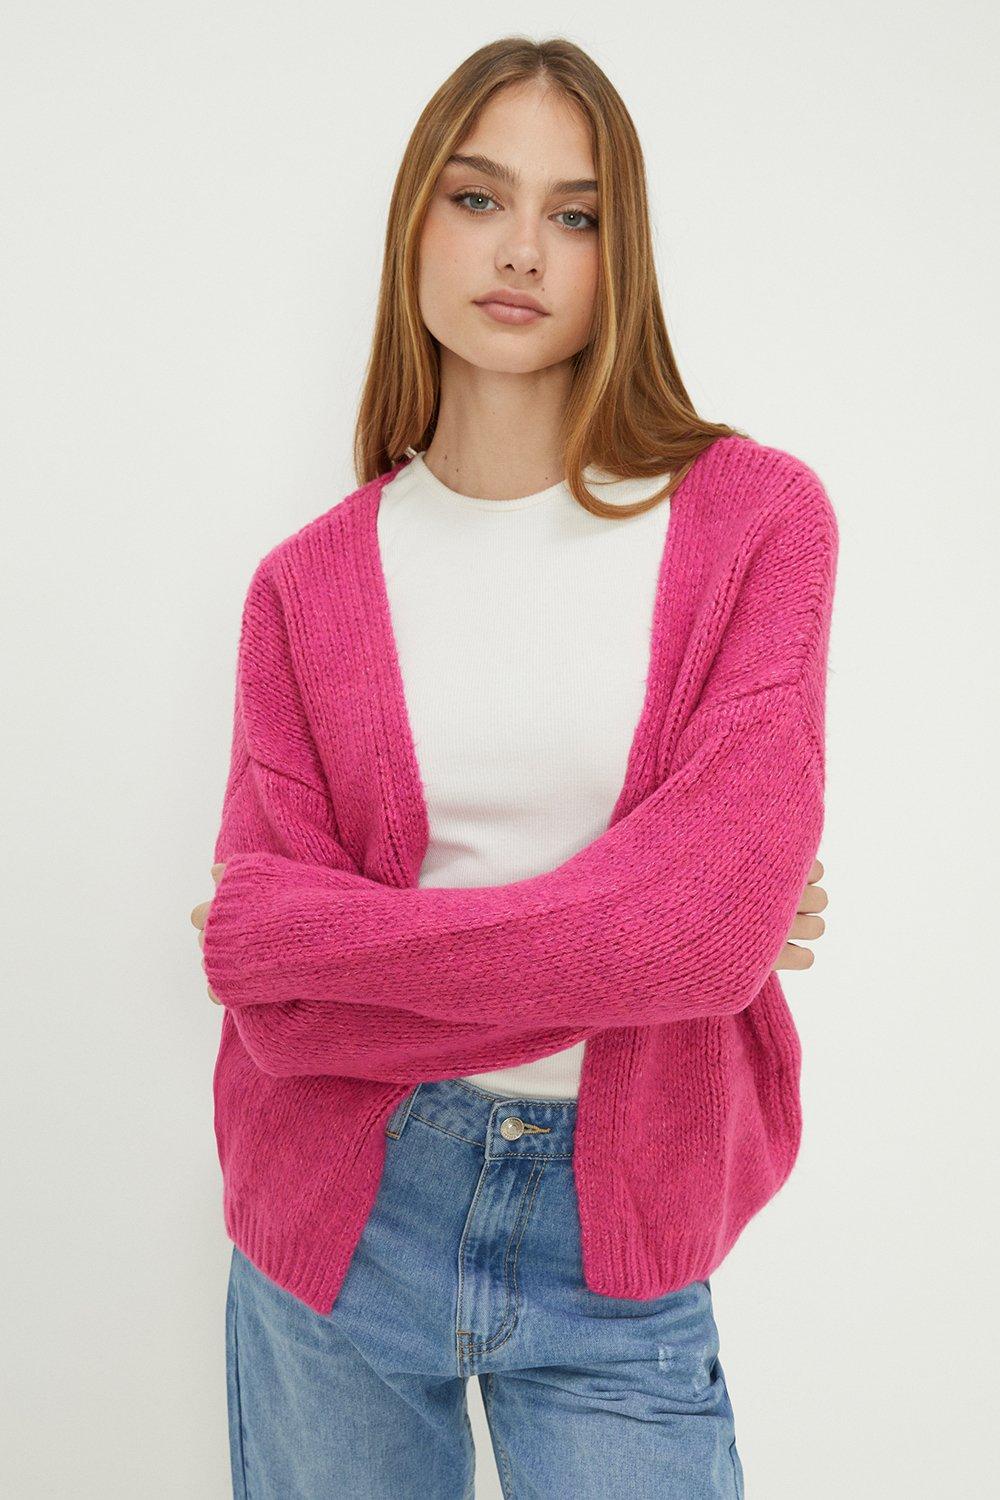 Women’s Chunky Knit Oversized Batwing Cardigan - pink - S/M